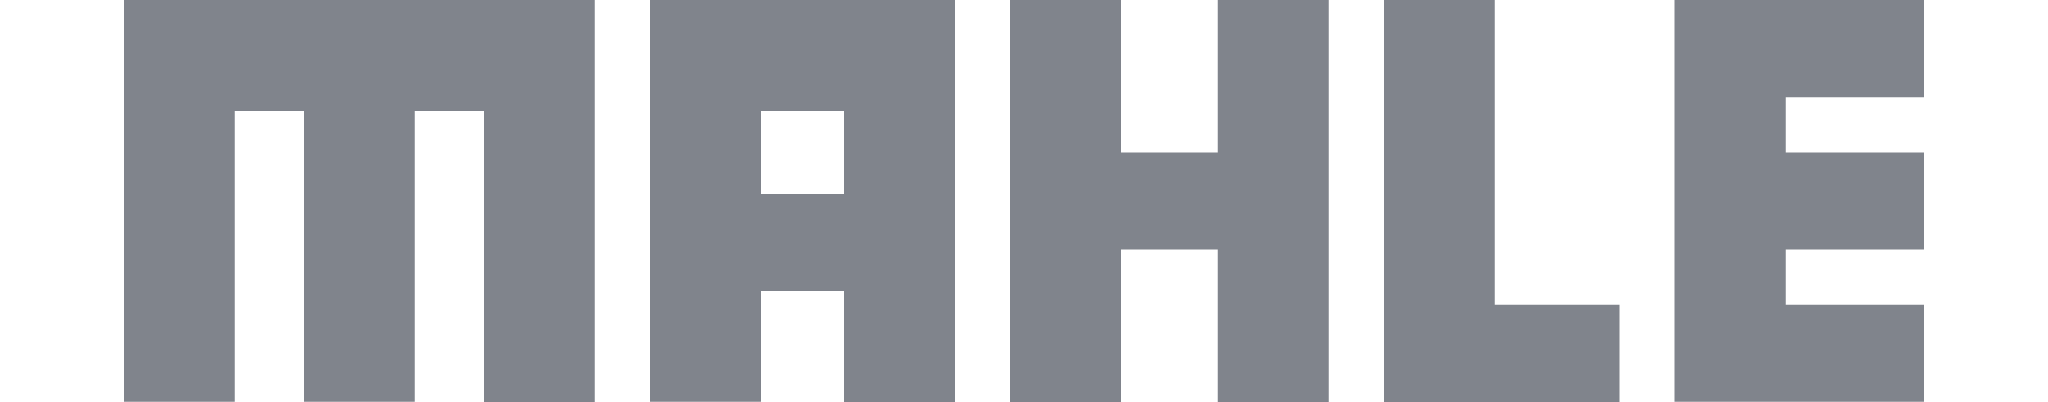 logo-mahle-metal-leve-2048.png